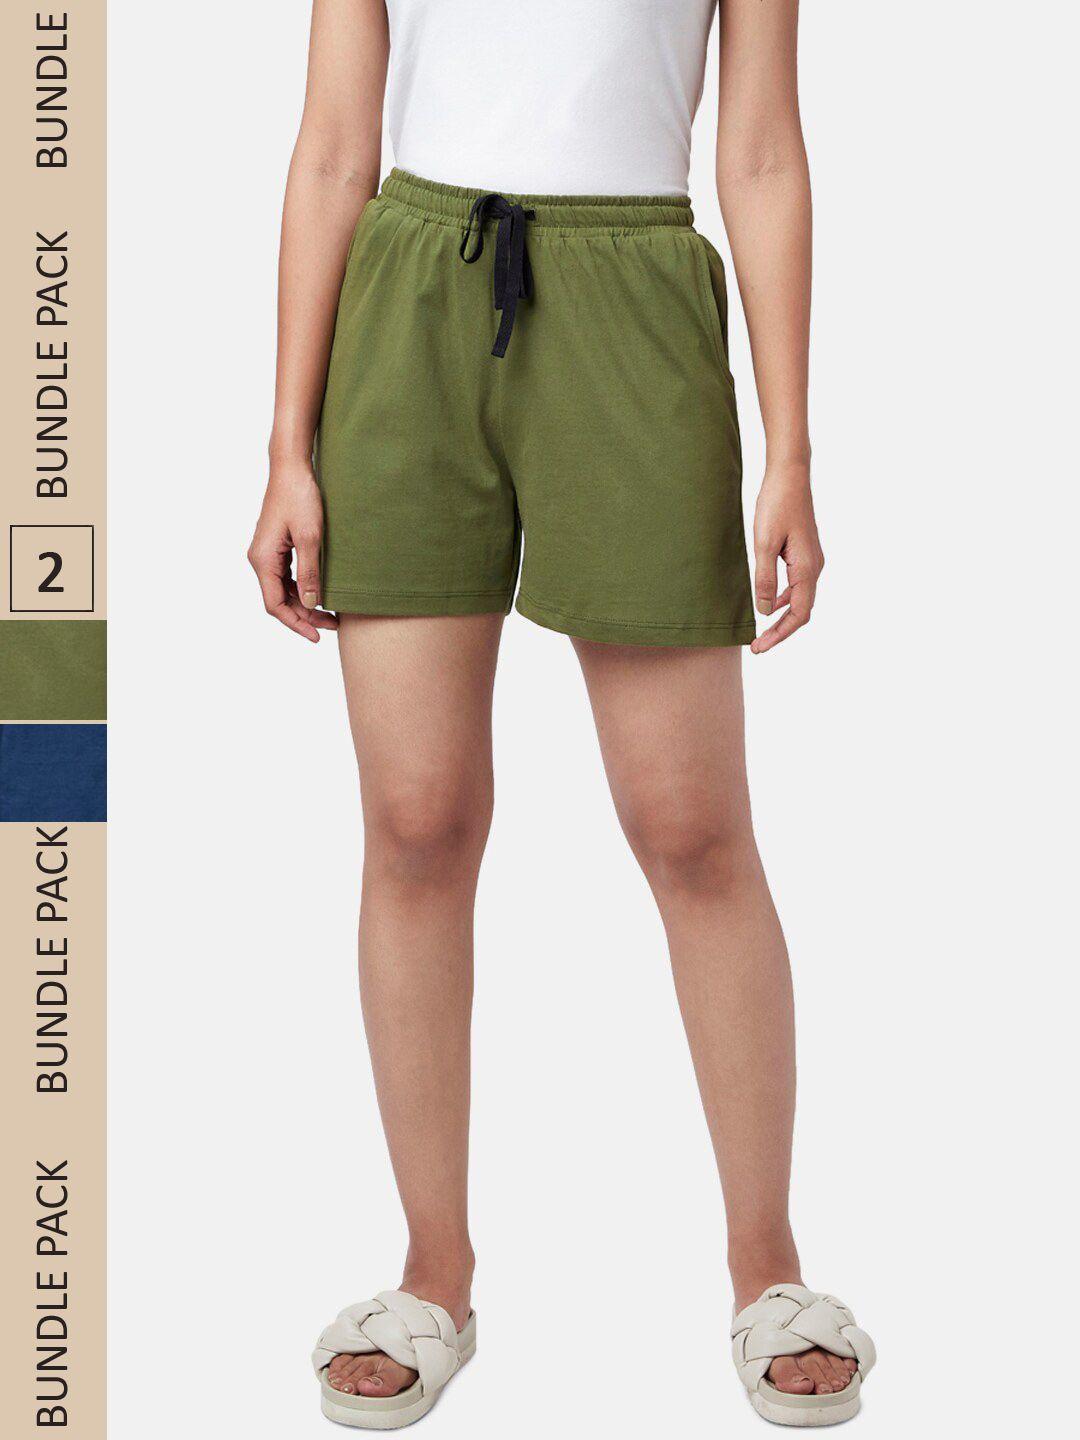 yu by pantaloons women navy blue & green pack of 2 lounge shorts